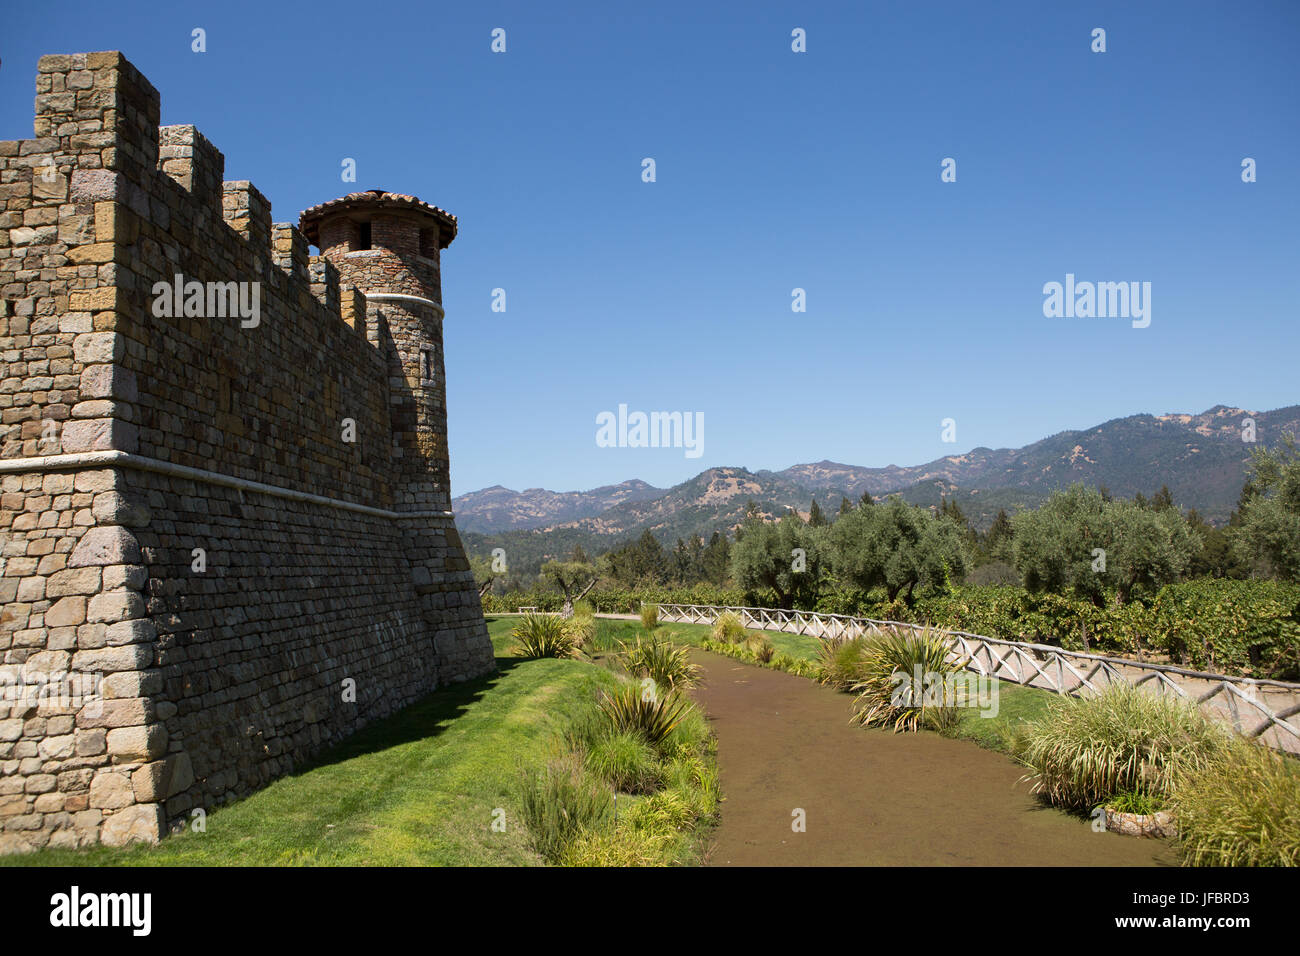 The architecture of Castello di Amorosa, a winery in Napa Valley, designed as a castle. Stock Photo